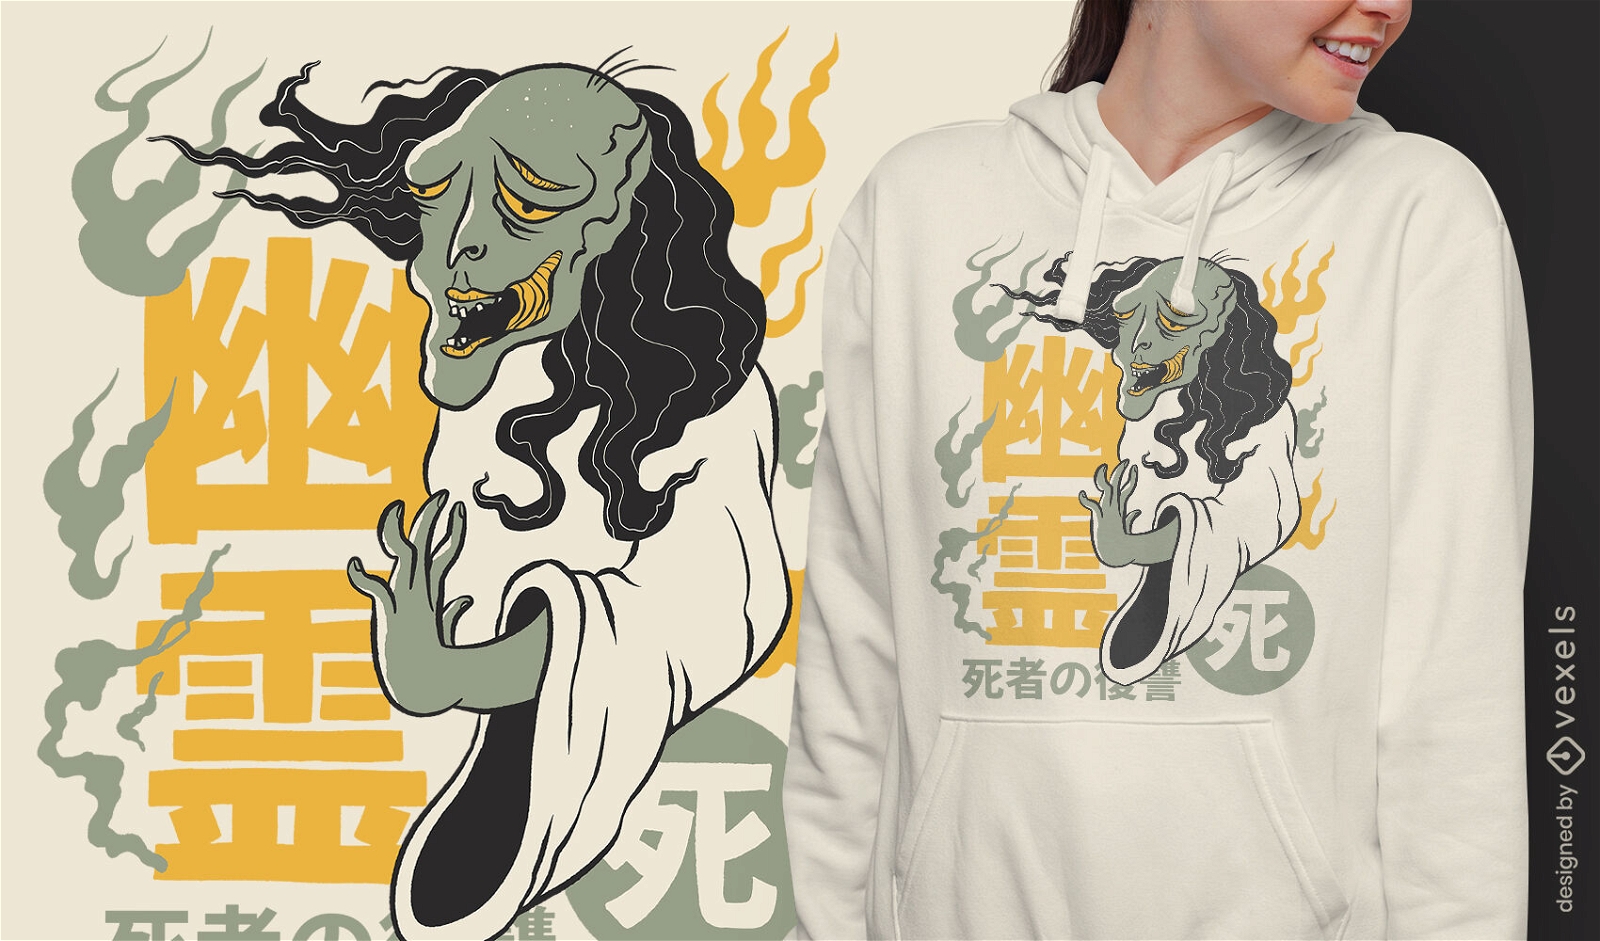 Rotten ghost Japanese t-shirt design